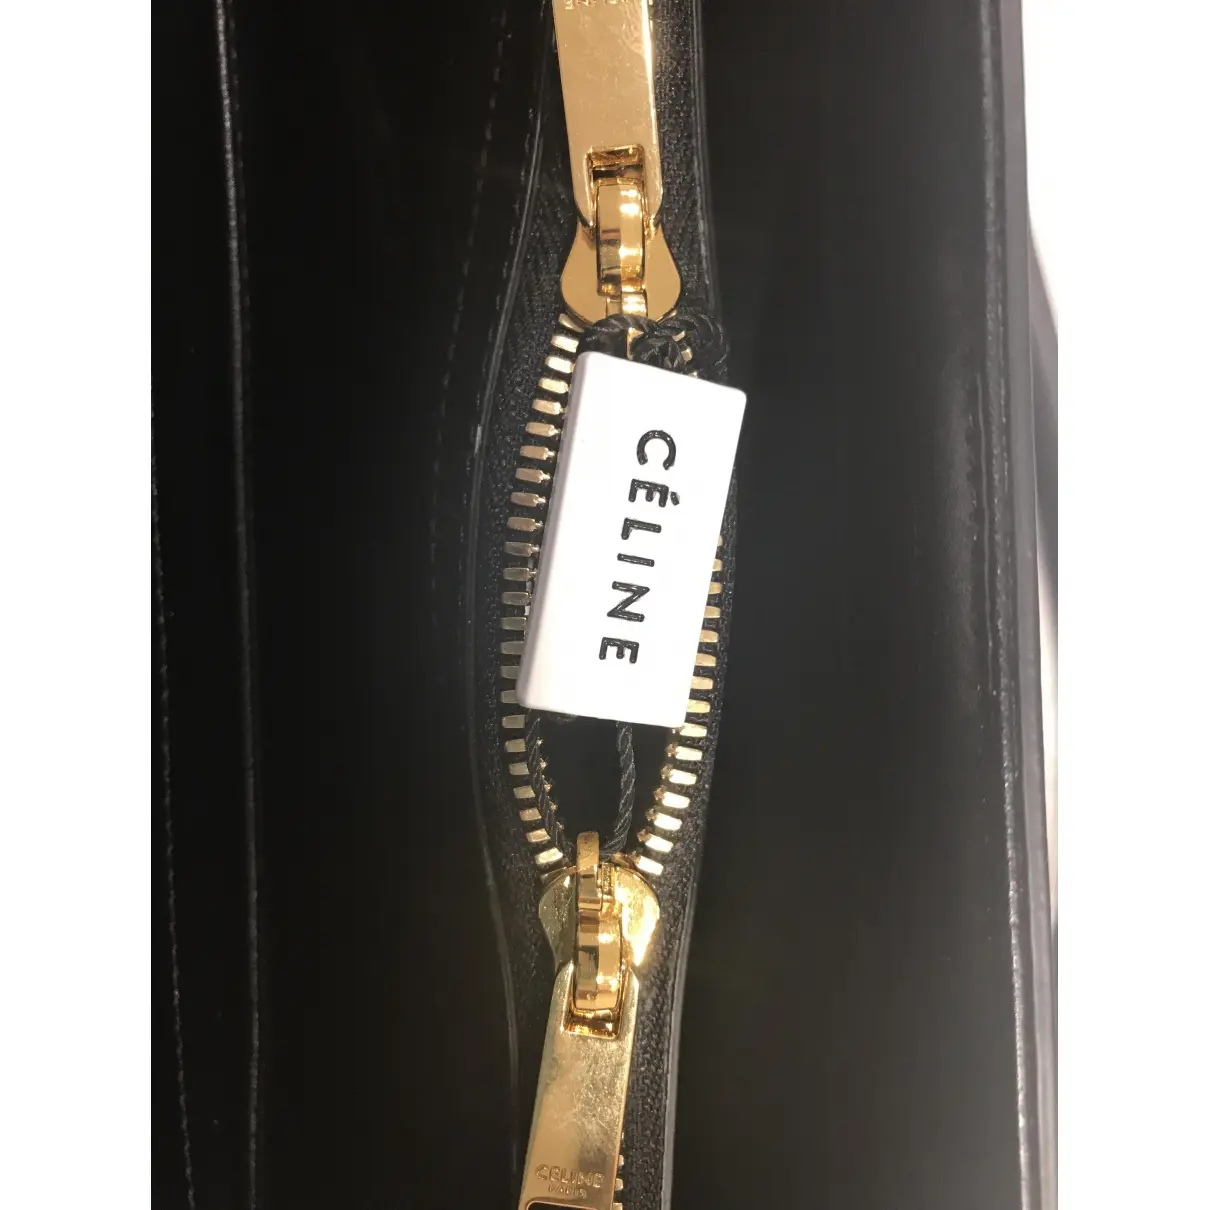 Buy Celine Sac 16 leather handbag online